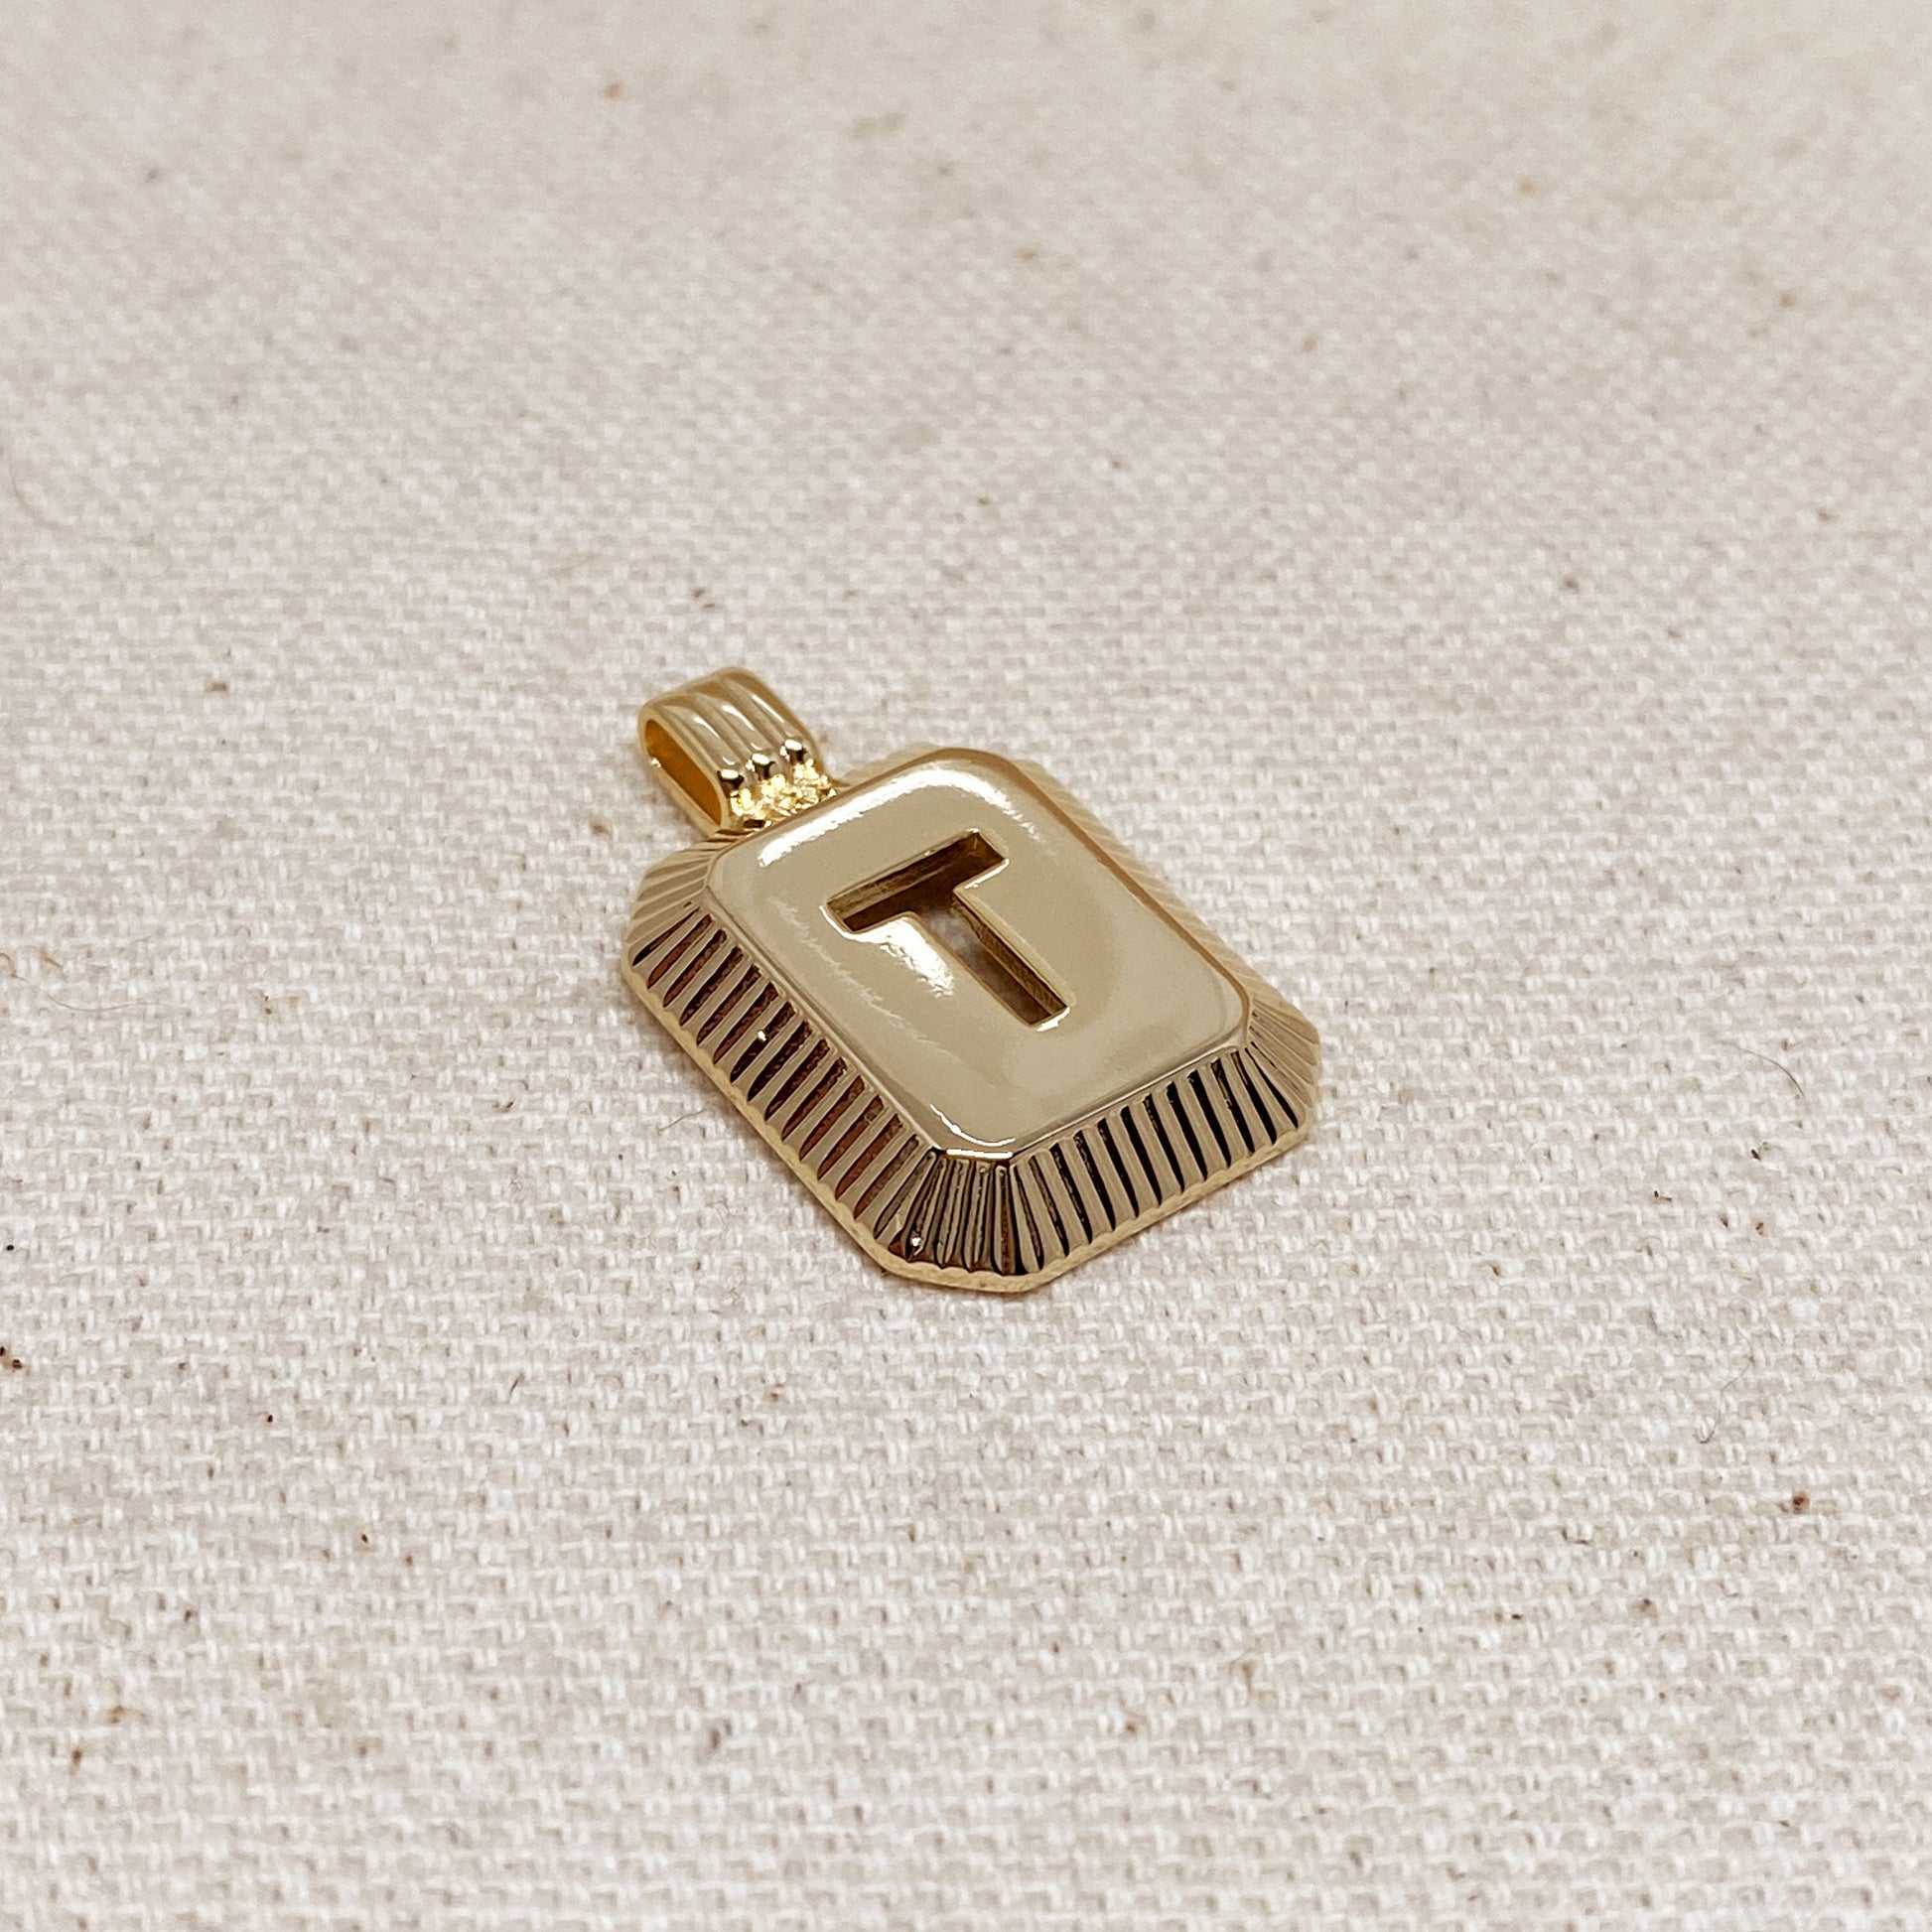 GoldFi 18k Gold Filled Initial Dainty Pendant